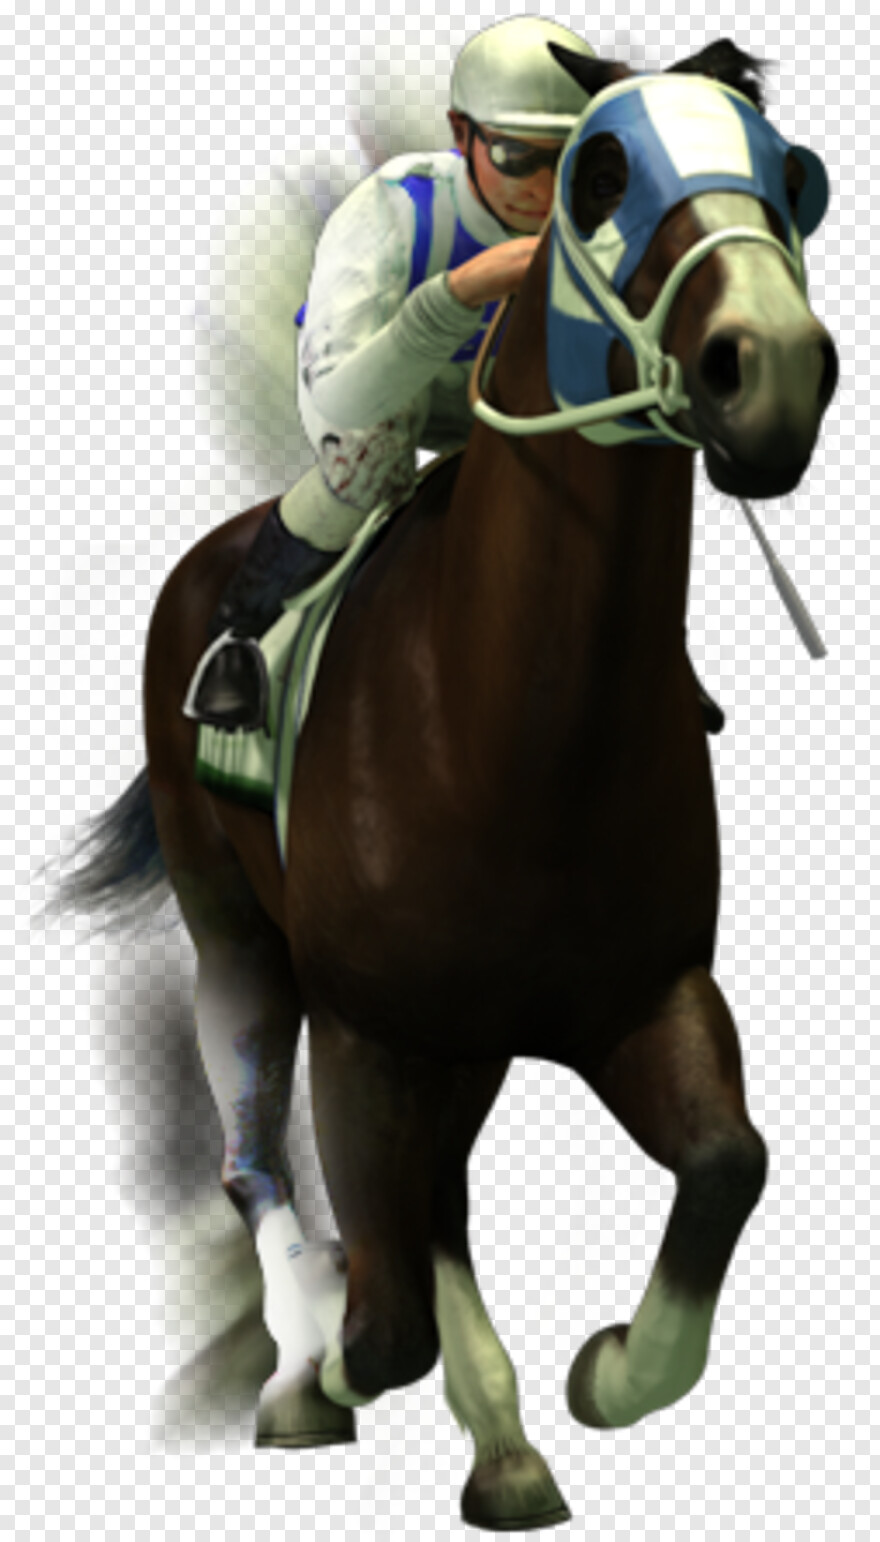  Horse Logo, Horse Head, Black Horse, Horse Mask, Horse, White Horse